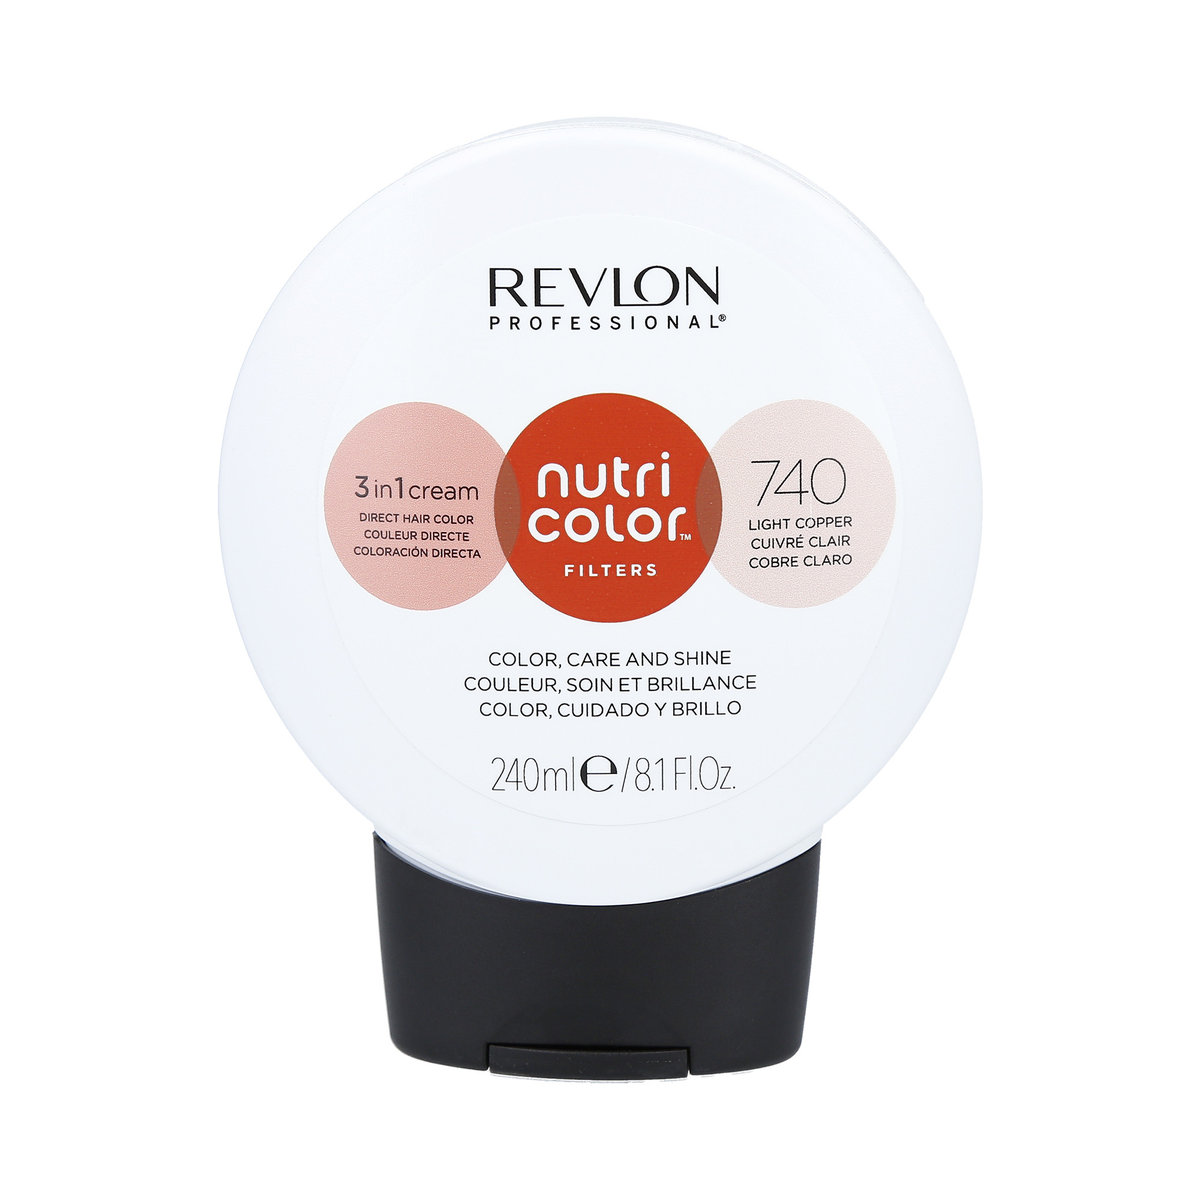 Revlon Professional Nutri Color Filters 740